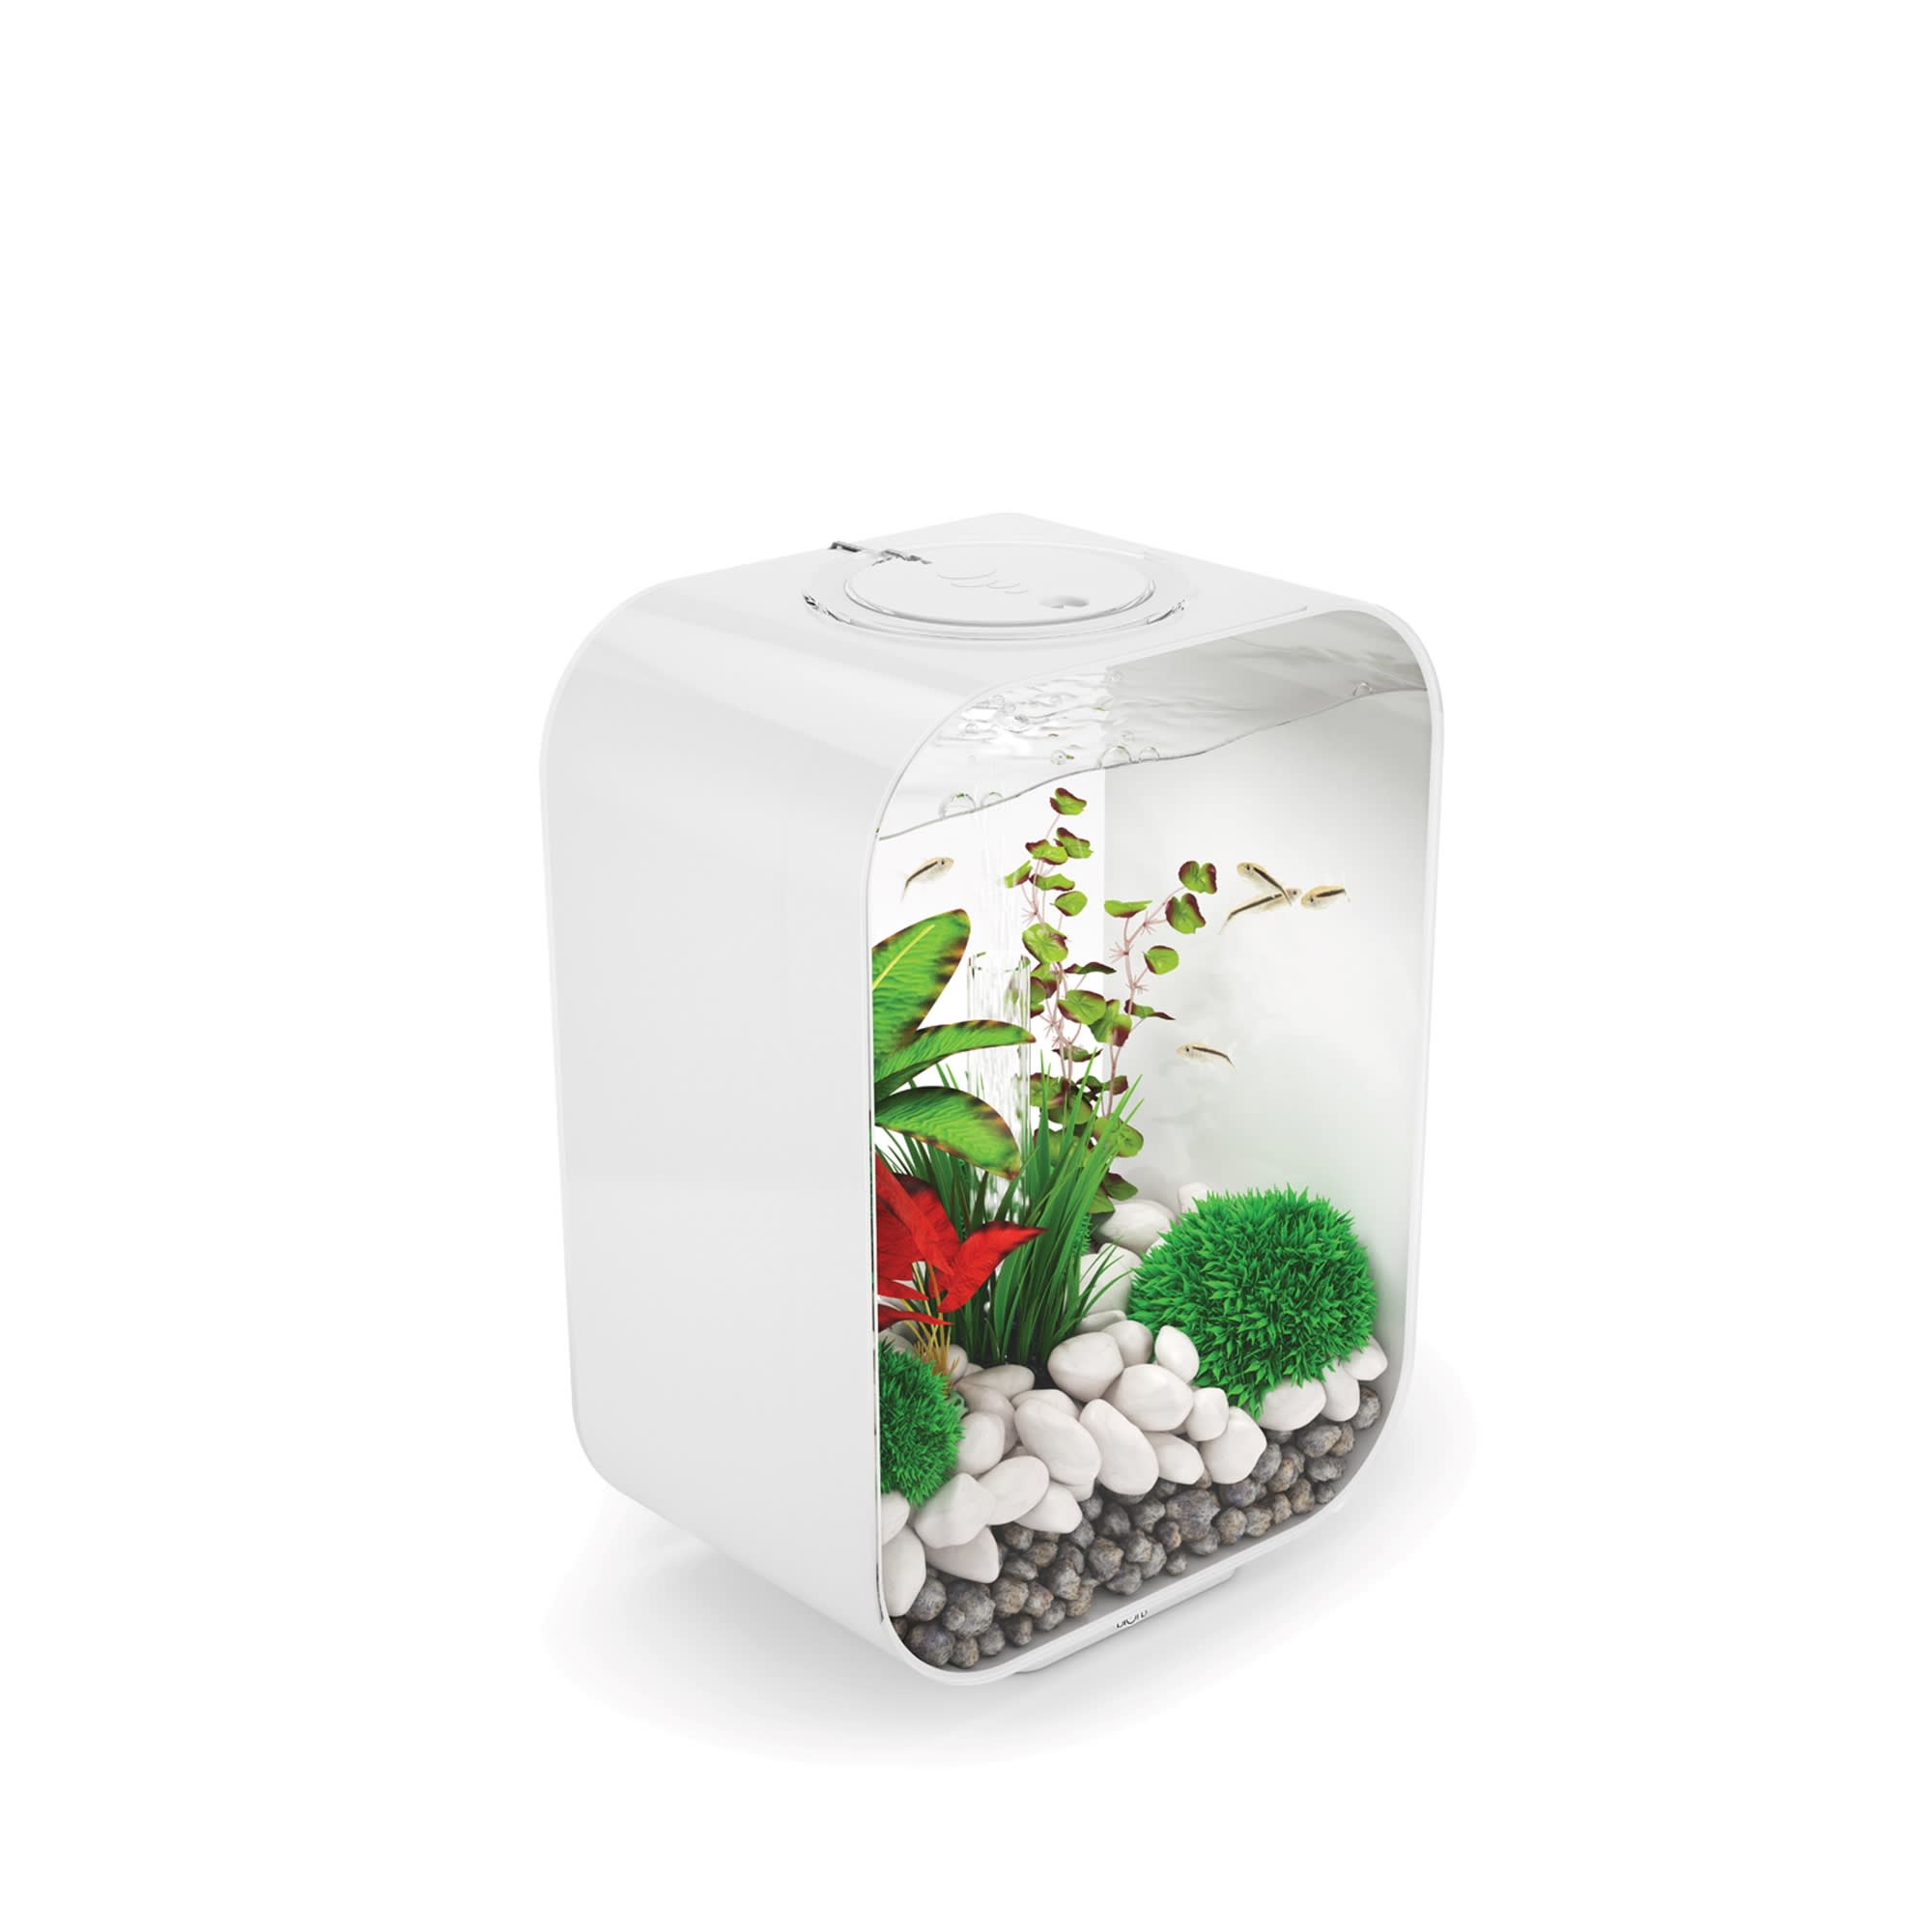 Gedeeltelijk lobby grip biOrb LIFE 15 White Aquarium with Standard Light, 4 Gallon | Petco